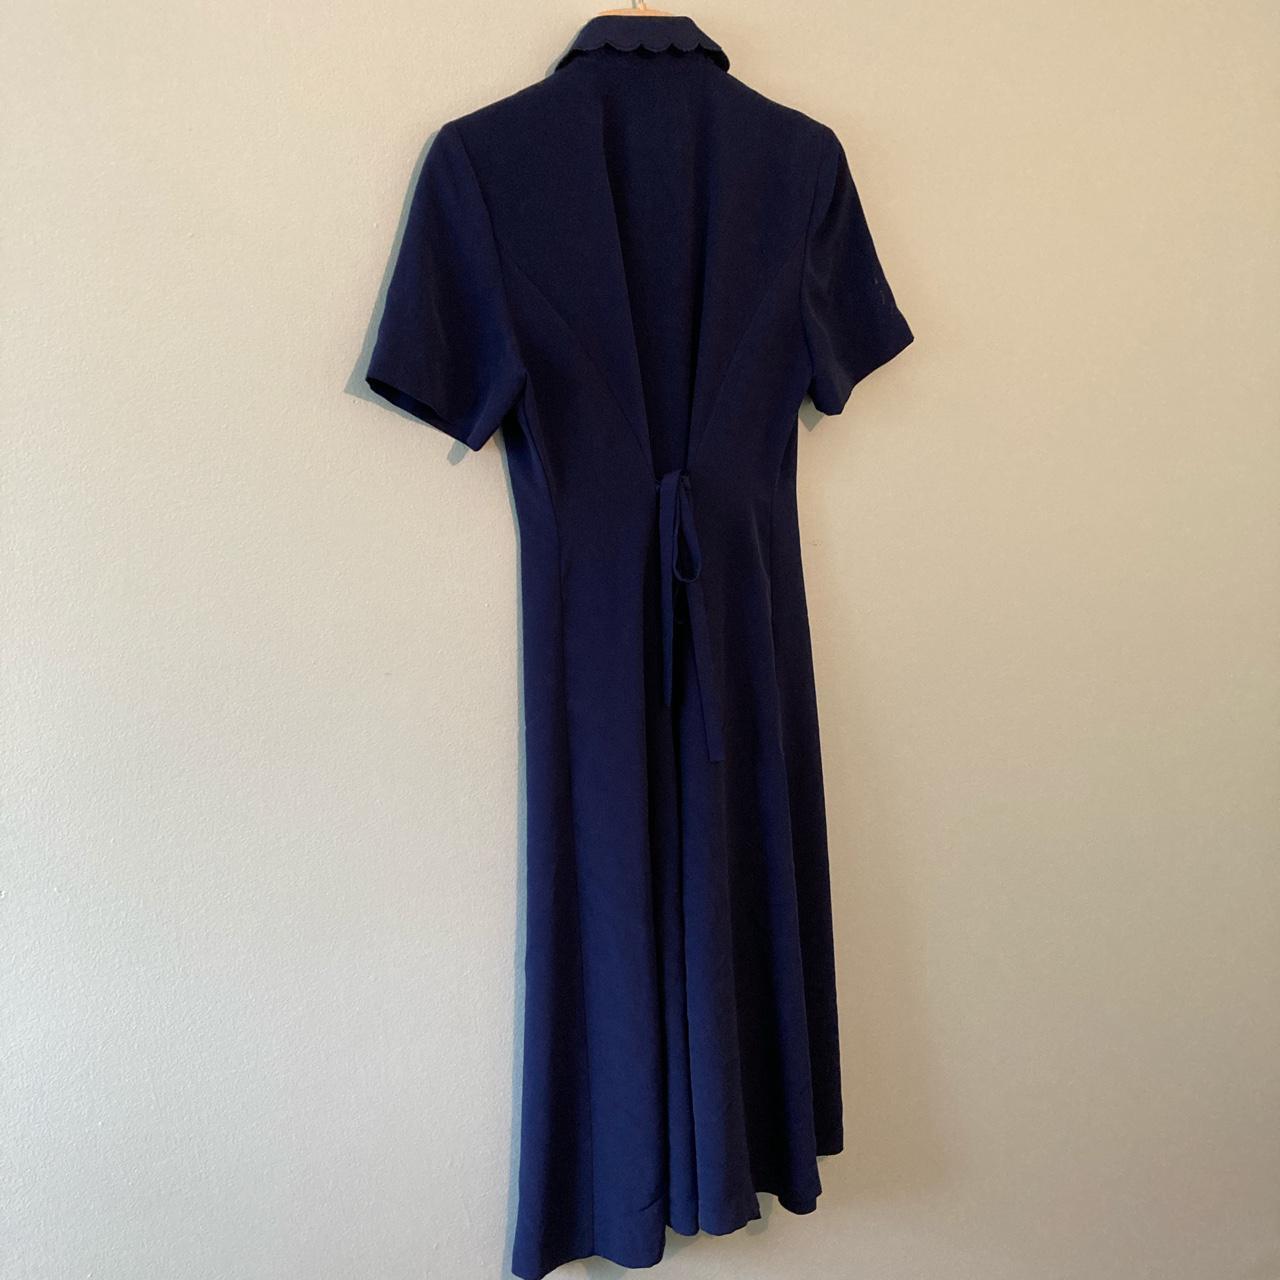 6397 Women's Blue and Navy Dress (2)